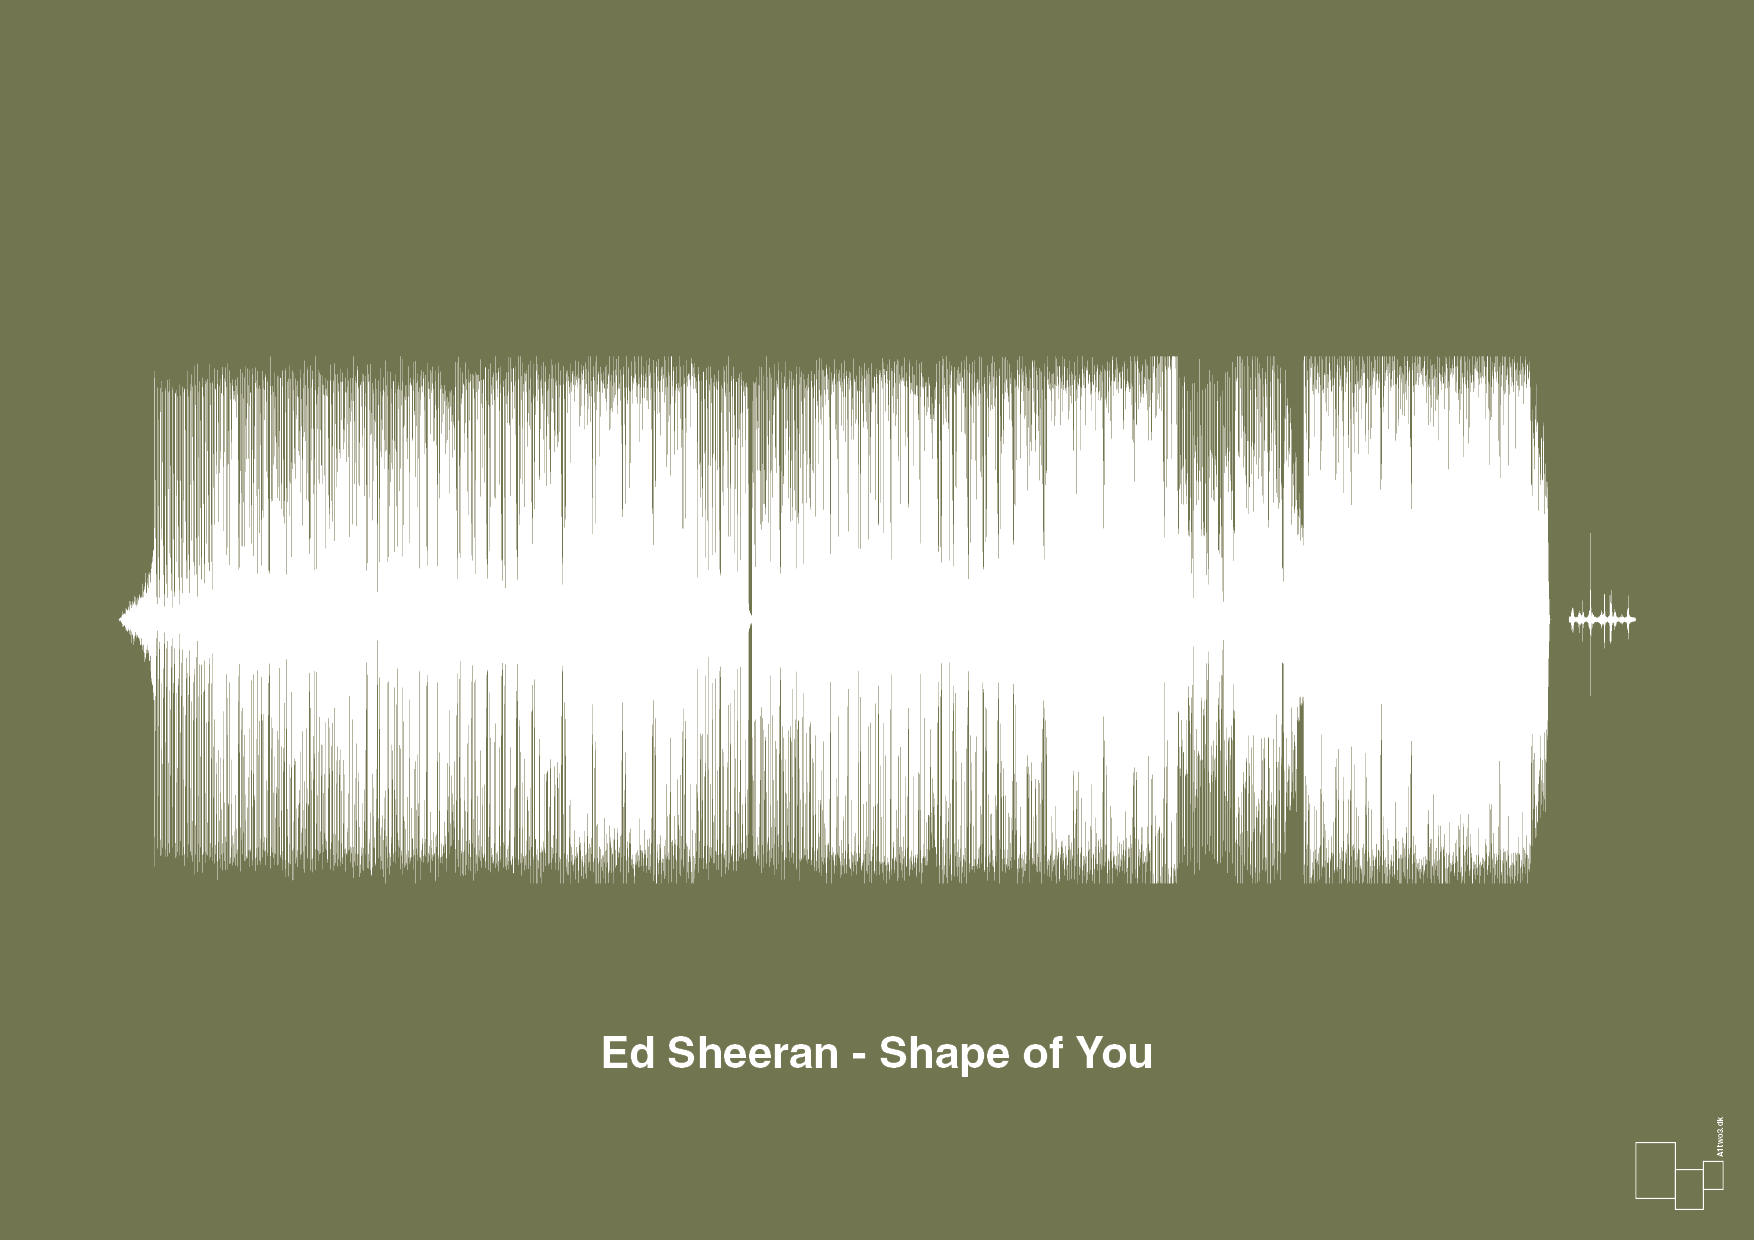 ed sheeran - shape of you - Plakat med Musik i Secret Meadow